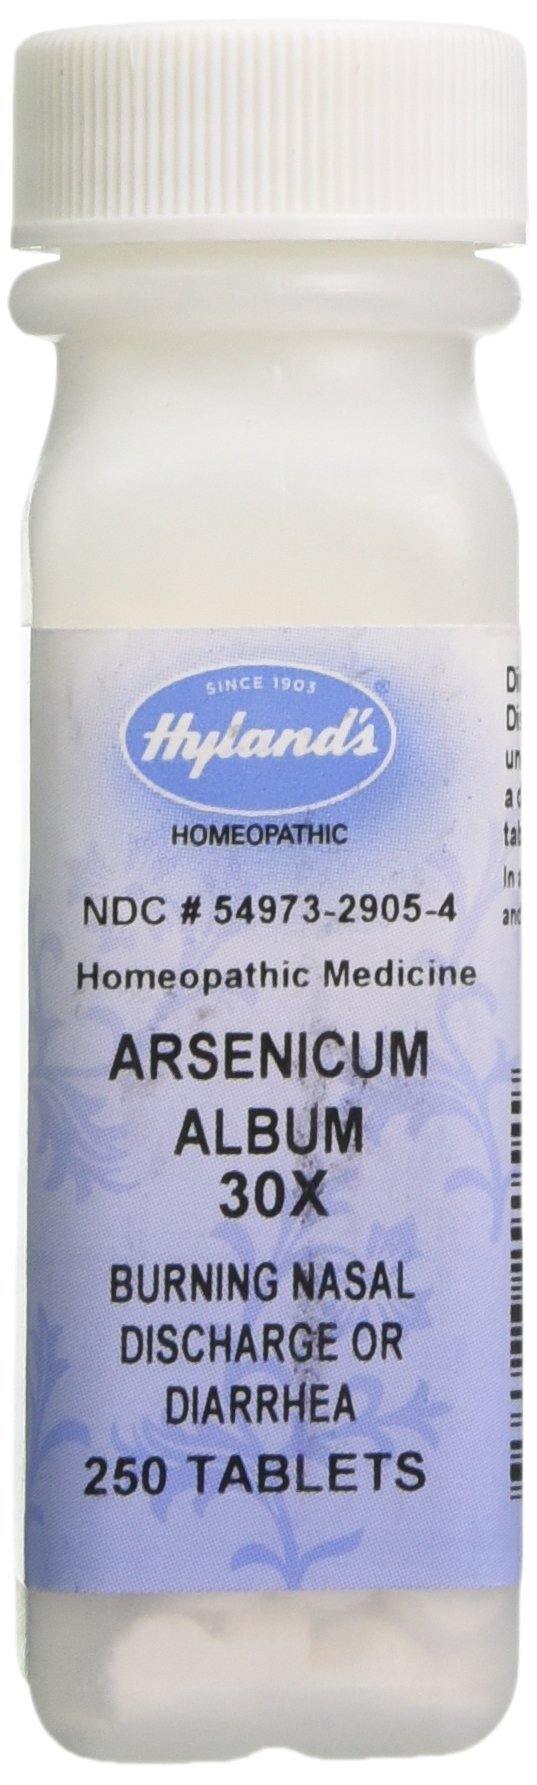 Hyland's Arsenicum Album, 30X, Tablets, 250 Tablets - Vitamins Emporium